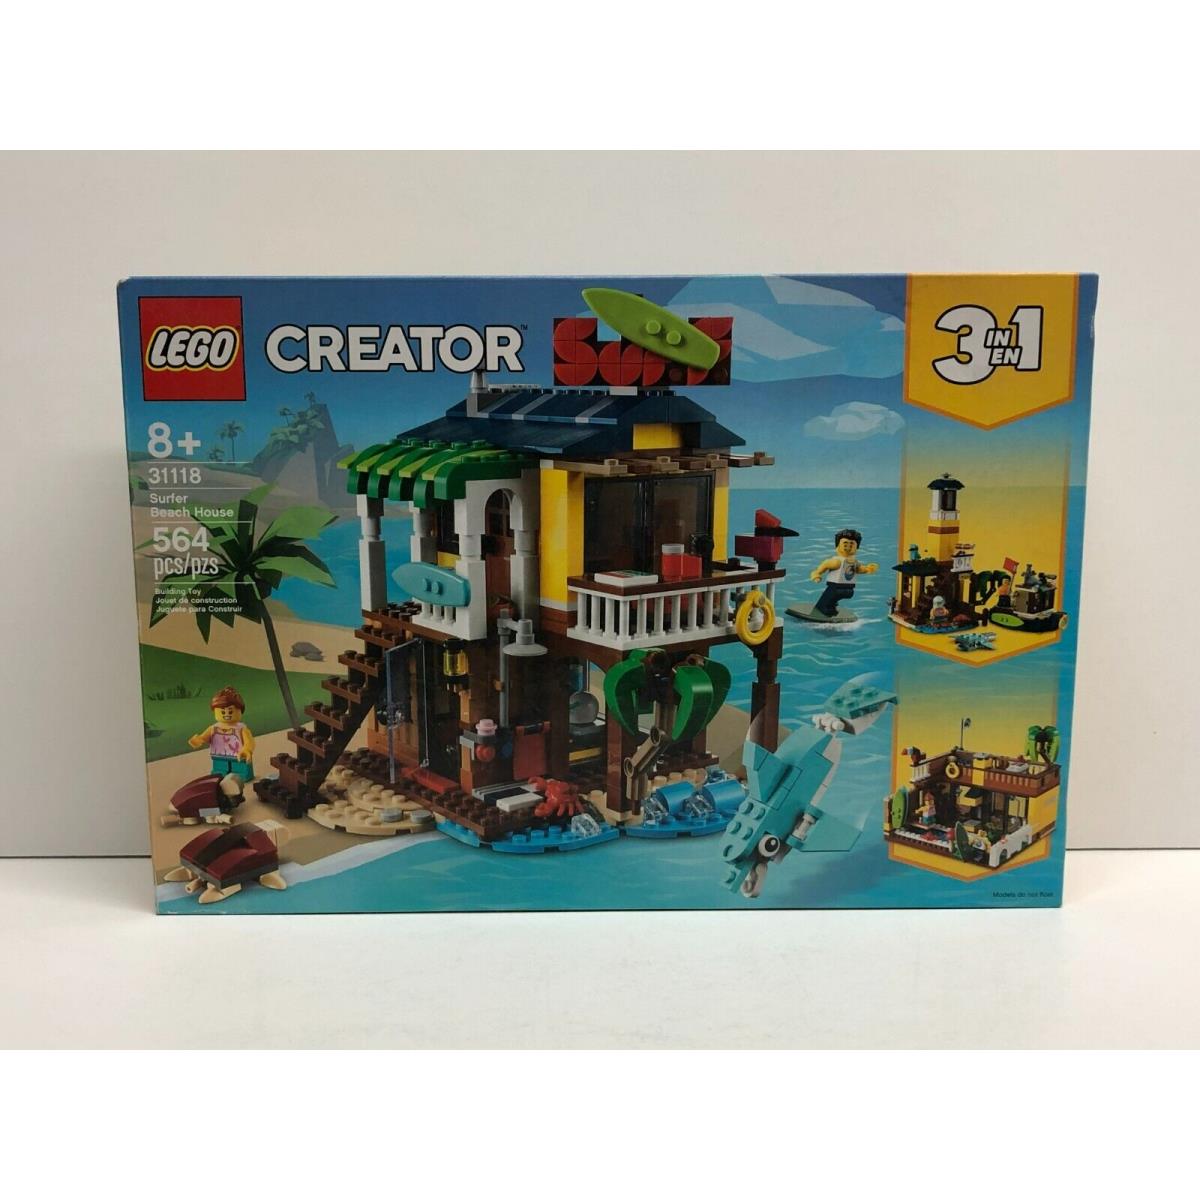 Lego 31118 Creator Surfer Beach House 564 Pcs